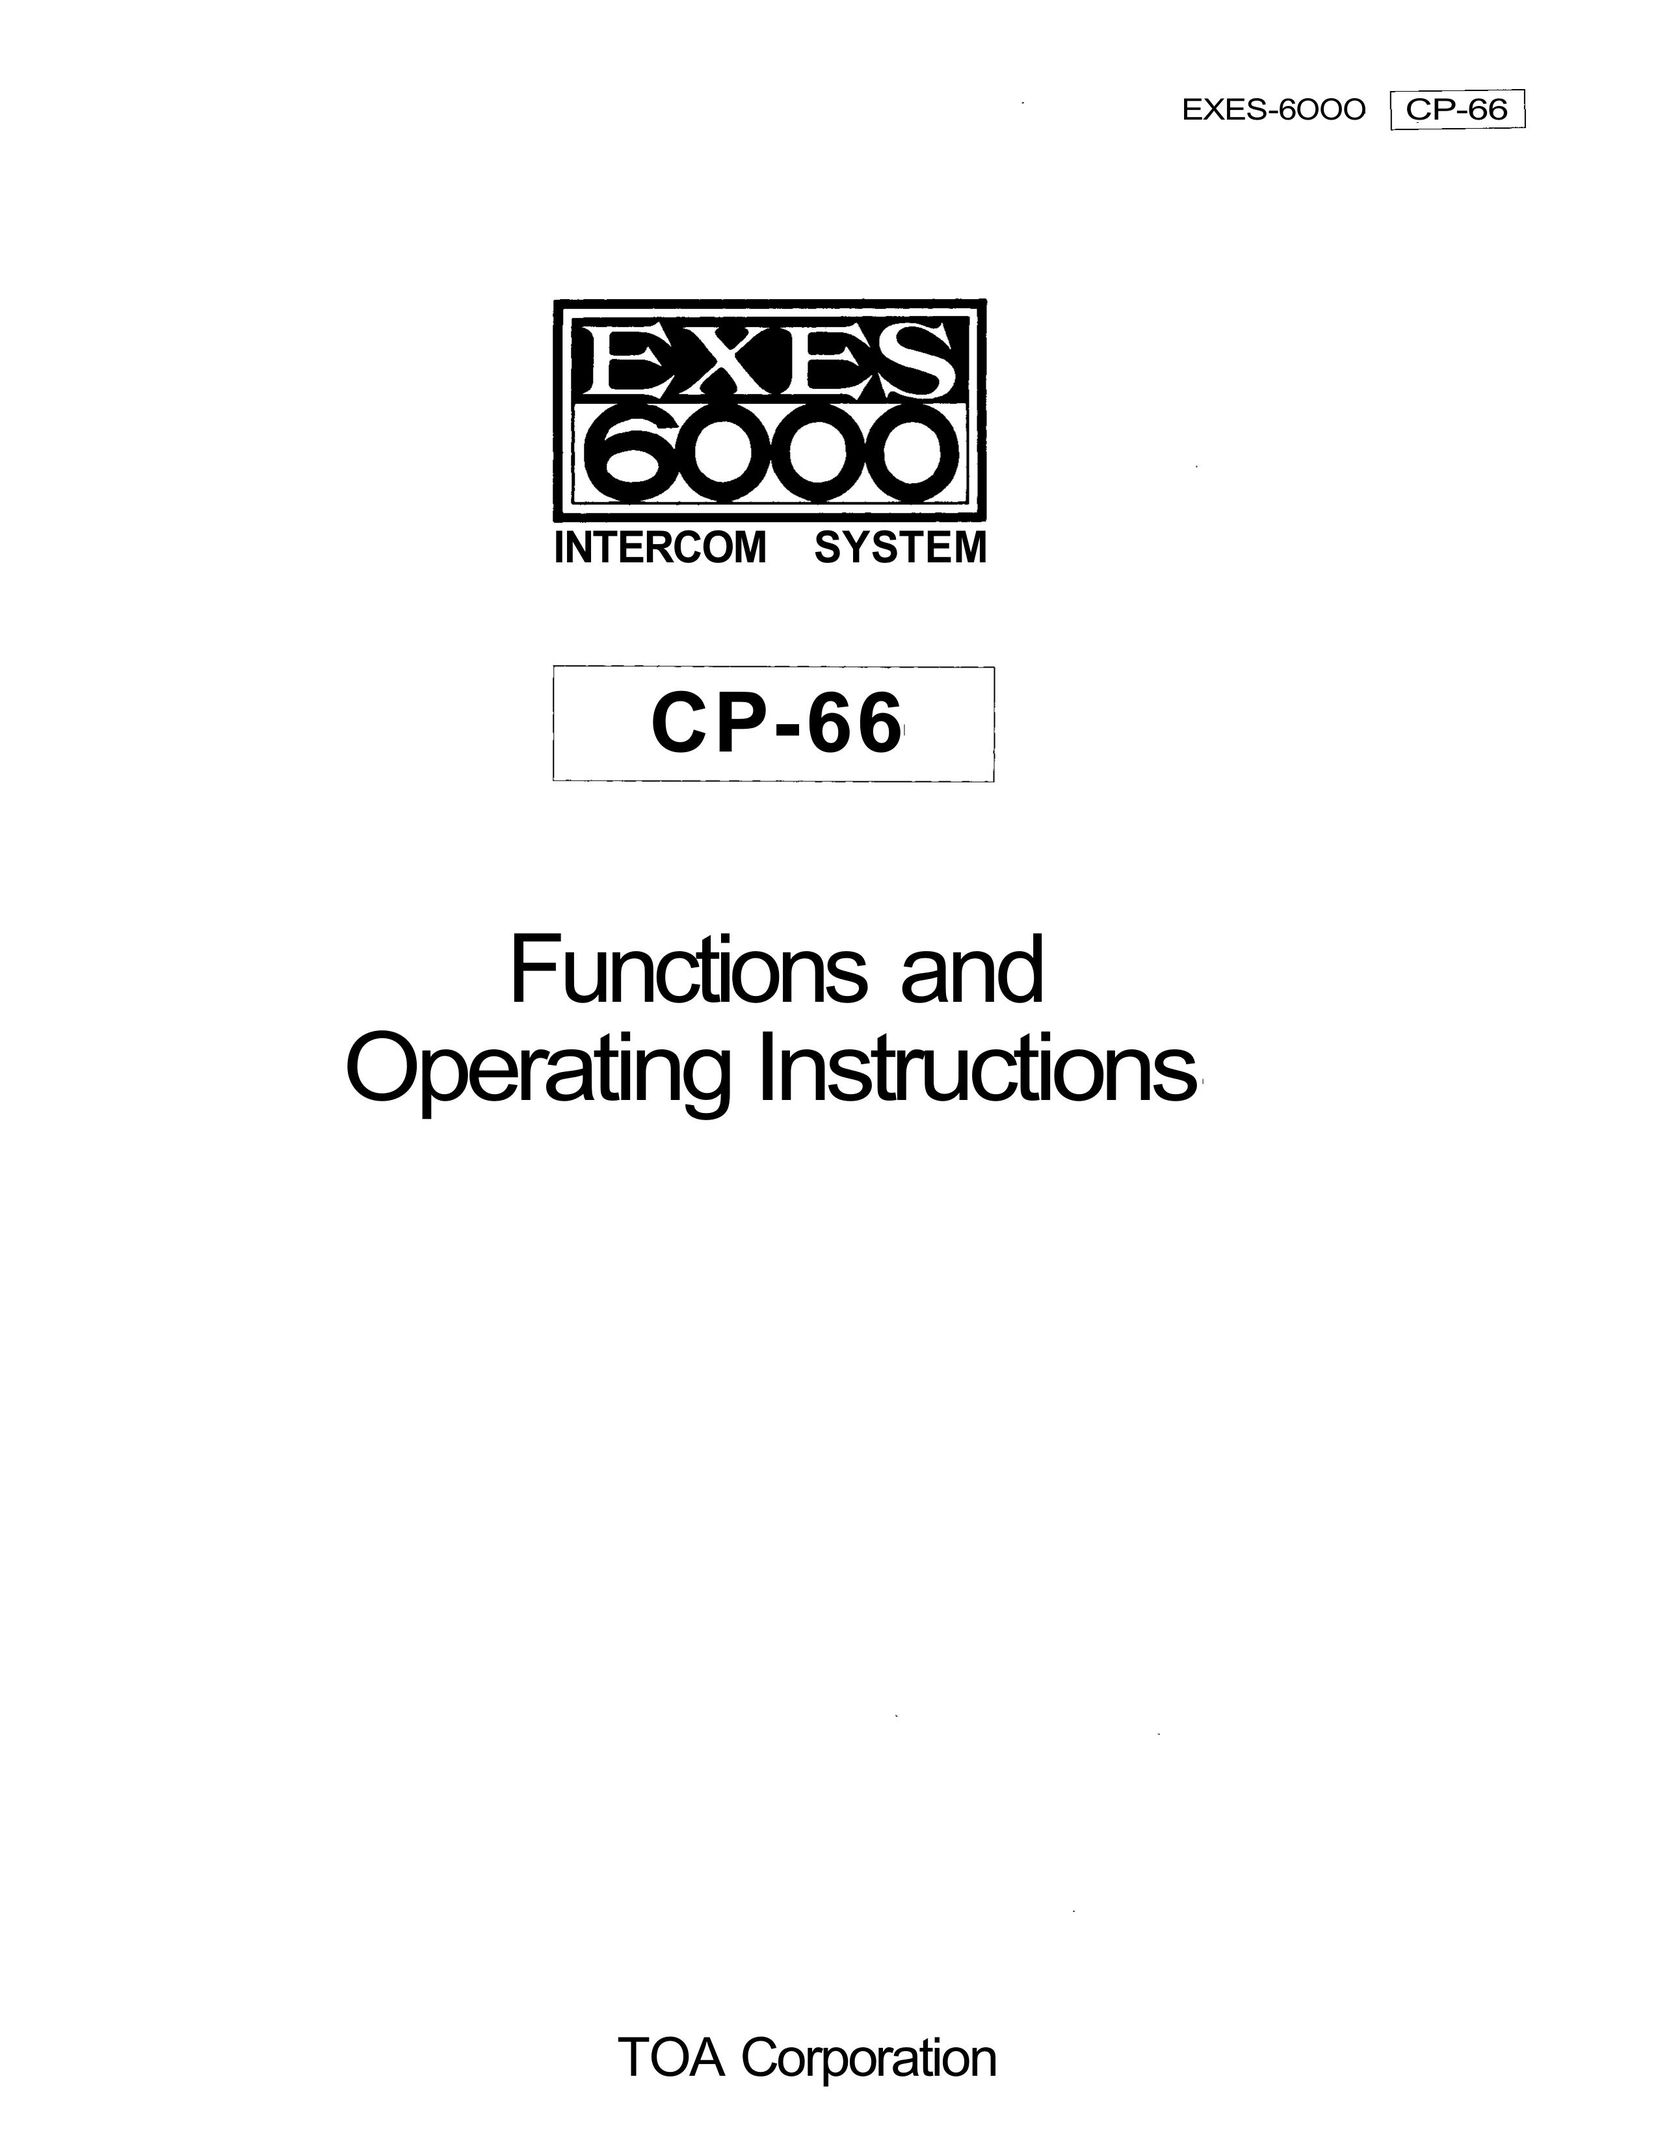 TOA Electronics CP-66 Intercom System User Manual